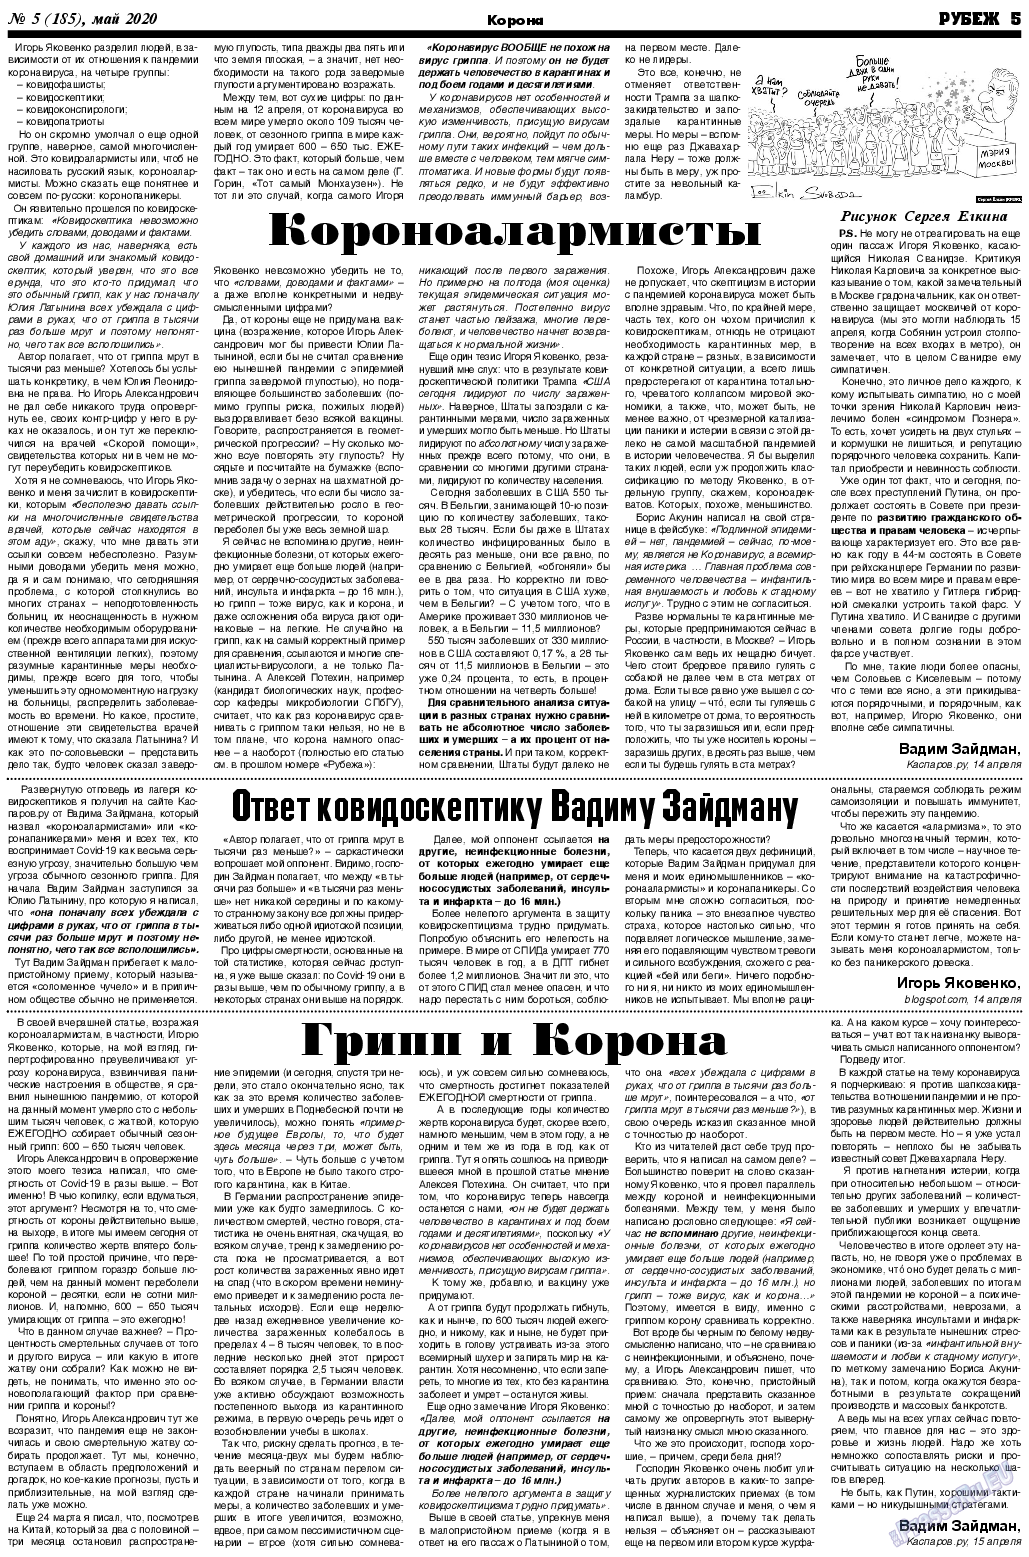 Рубеж, газета. 2020 №5 стр.5